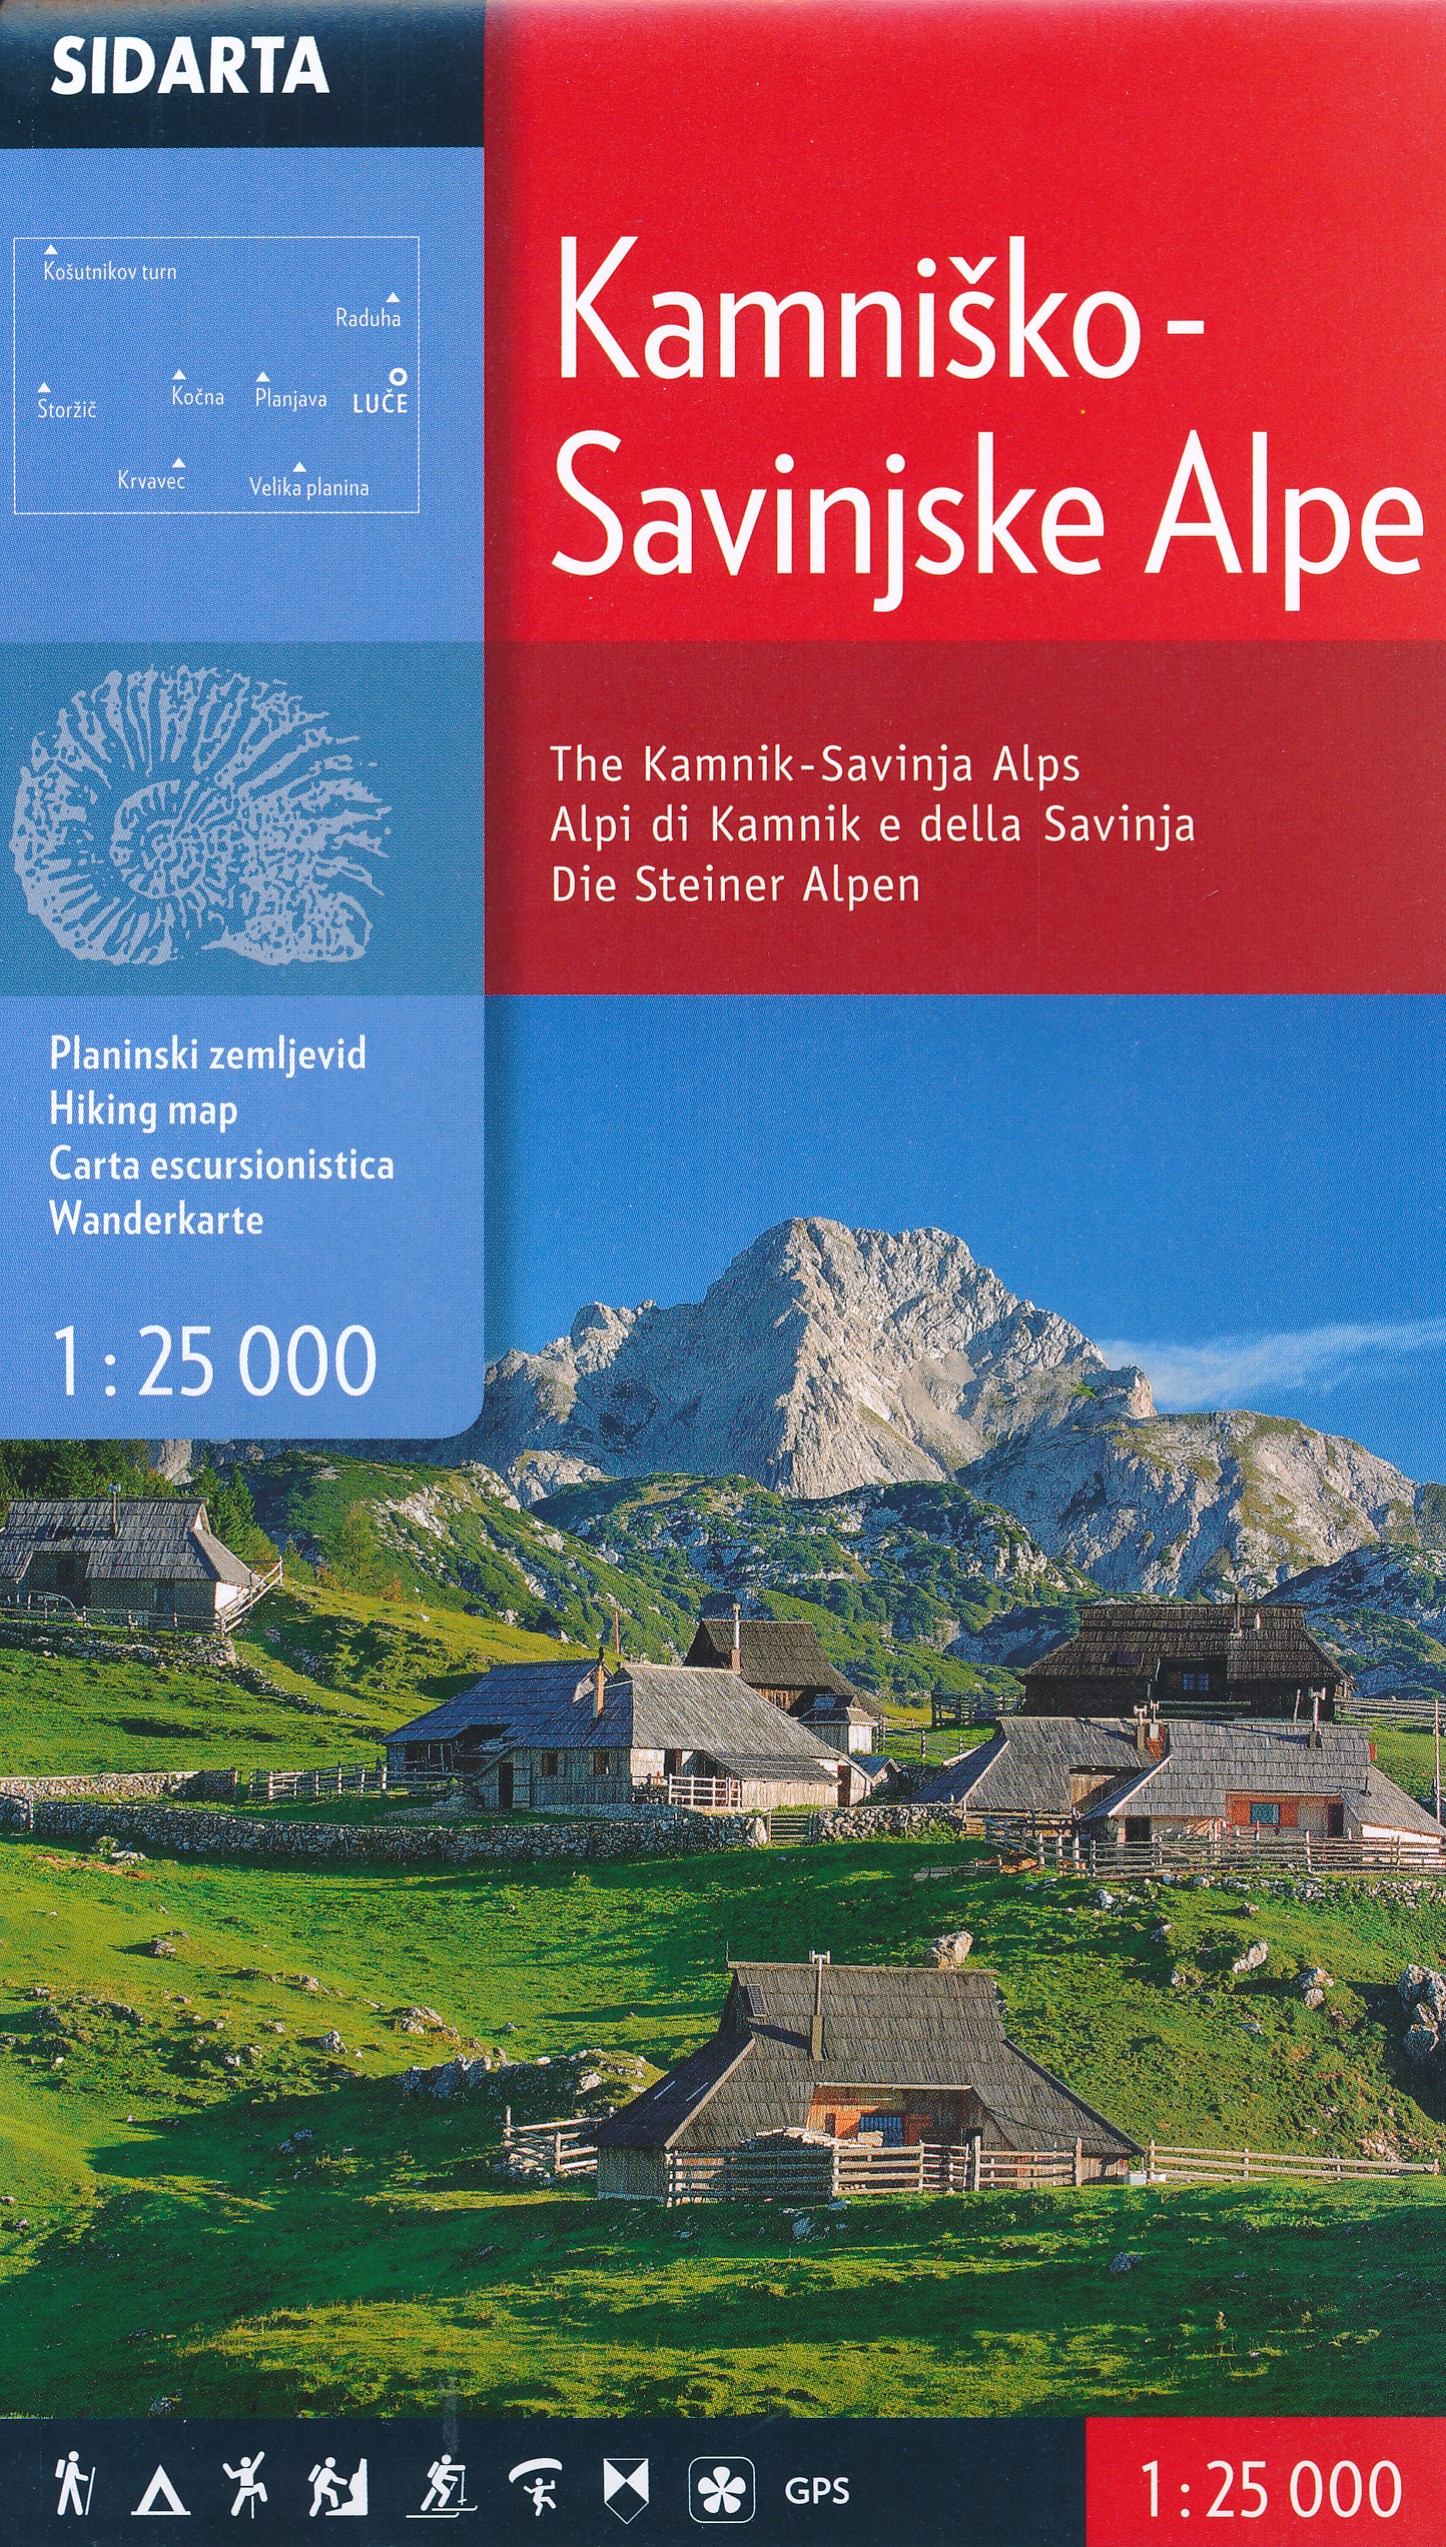 Online bestellen: Wandelkaart The Kamnik-Savinja Alps, Kamnisko Savinjske Alpe | Sidarta